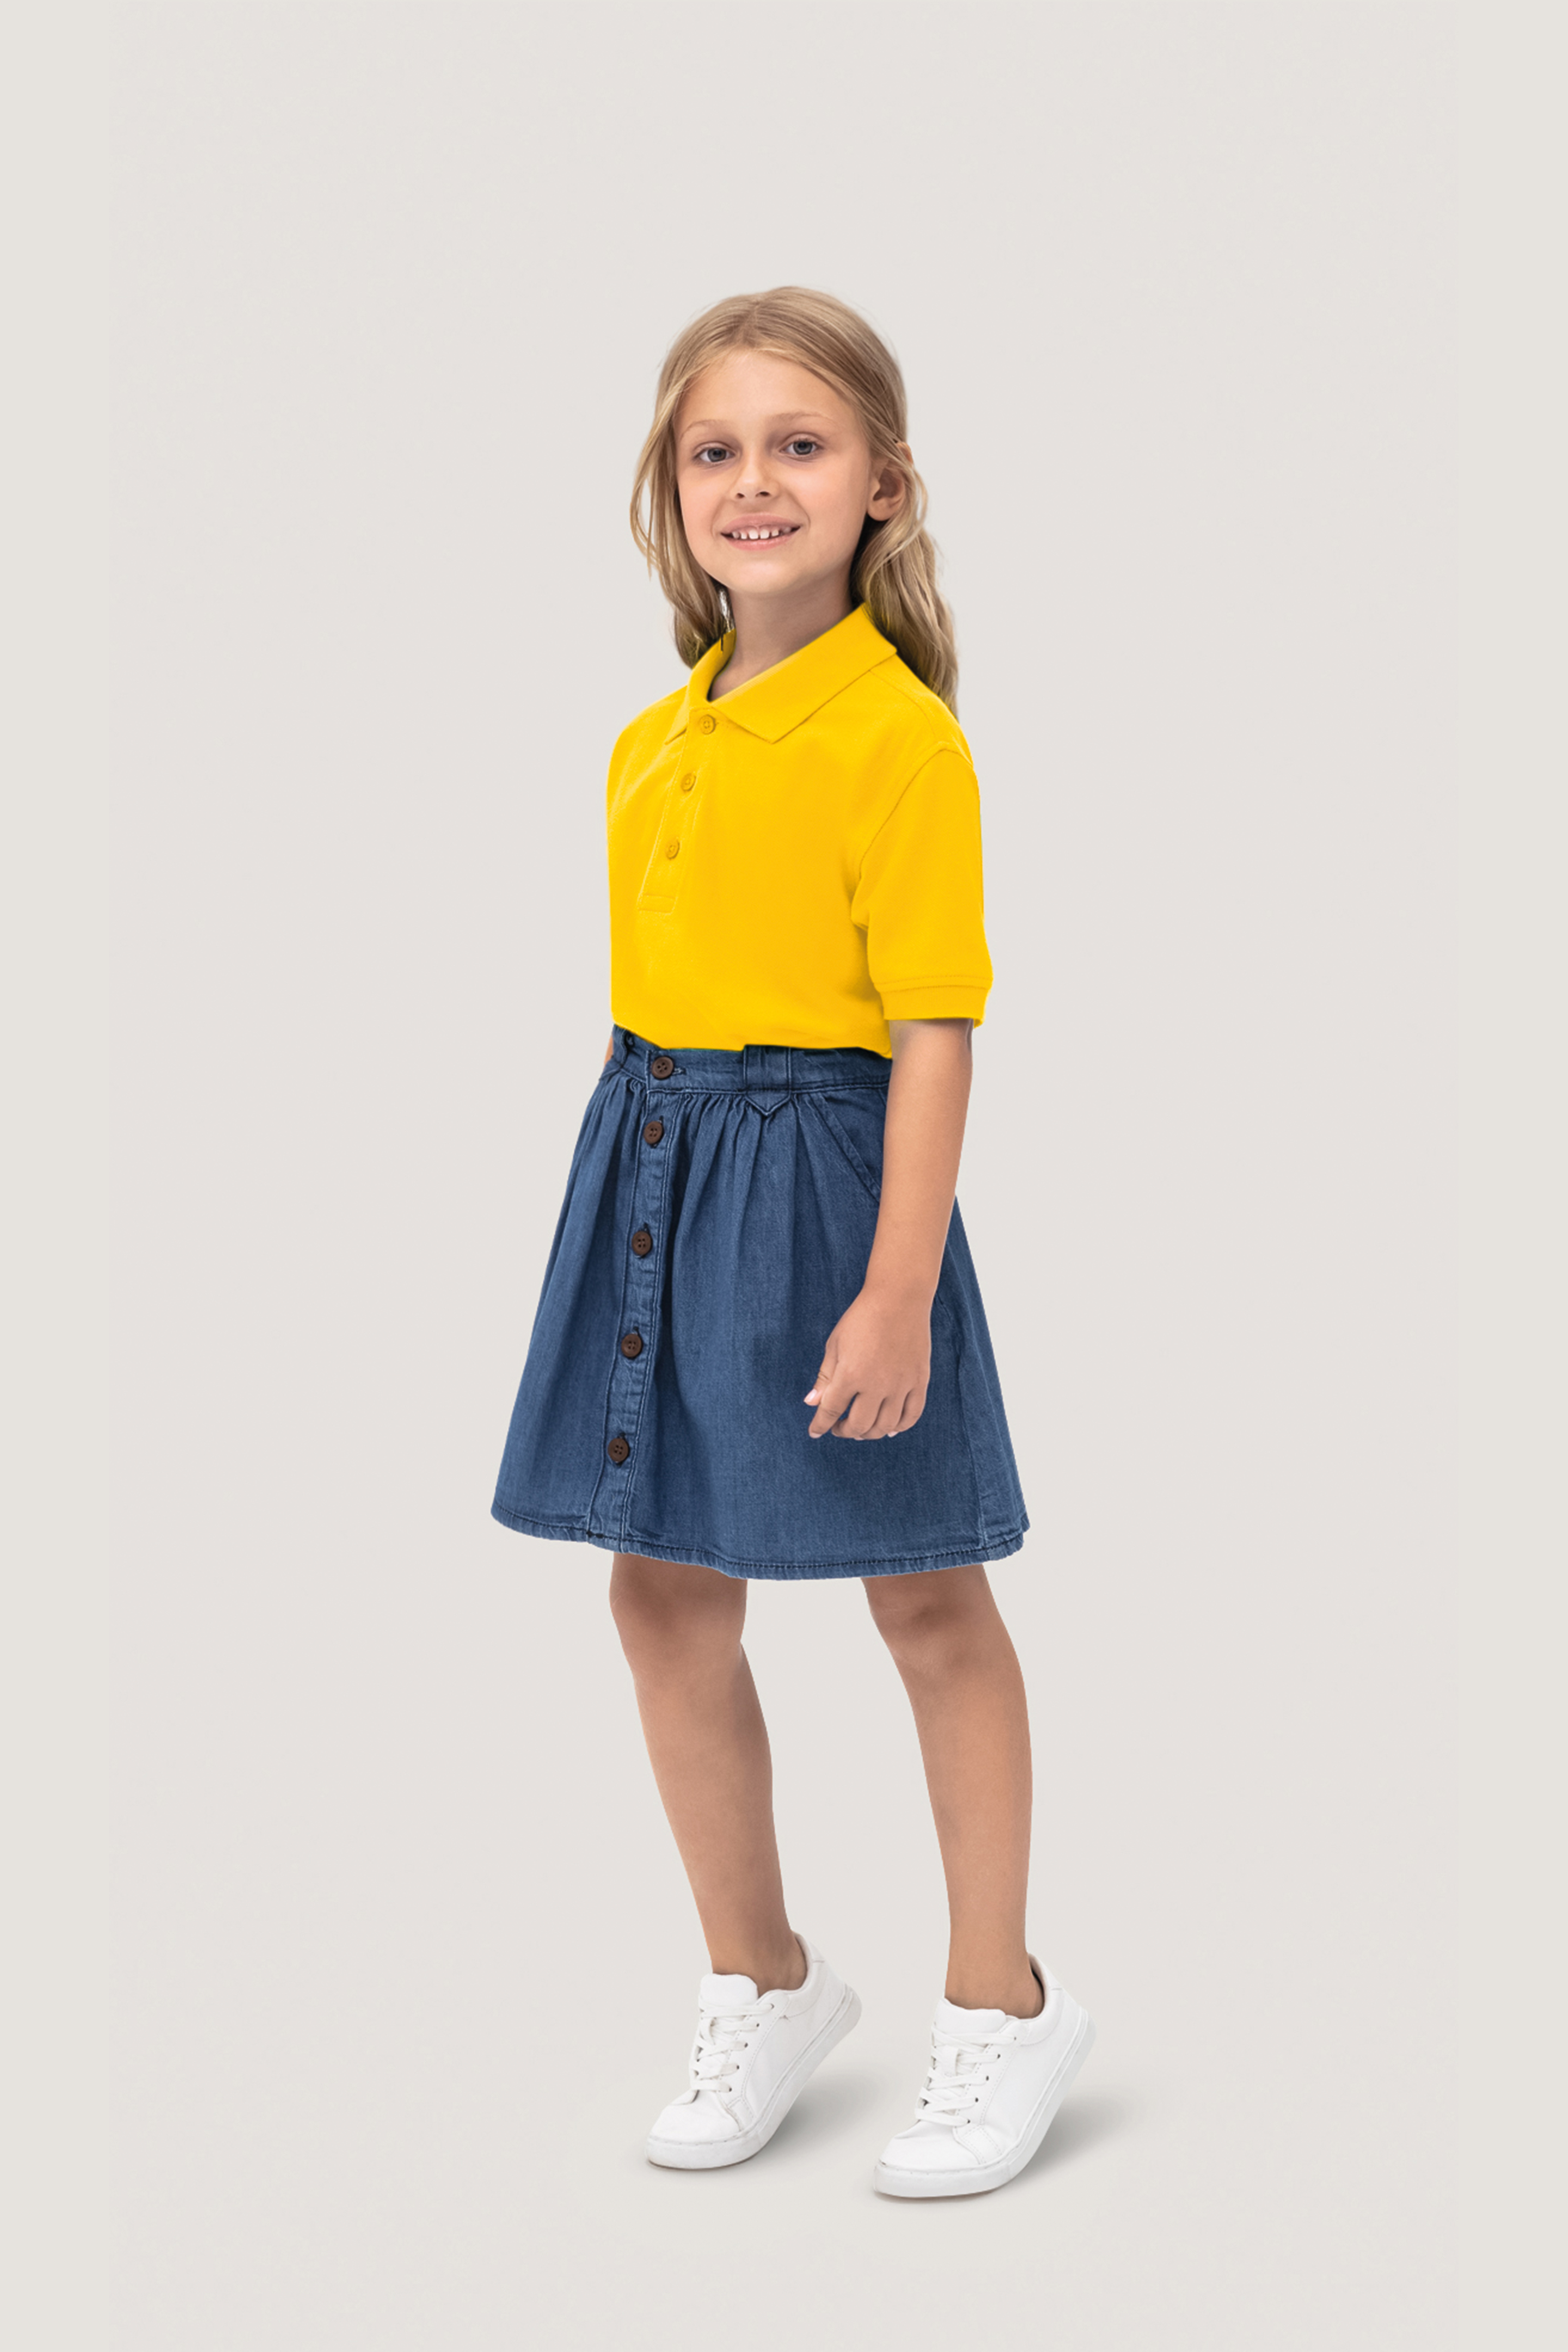 HAKRO Kinder Poloshirt Classic NO. 400